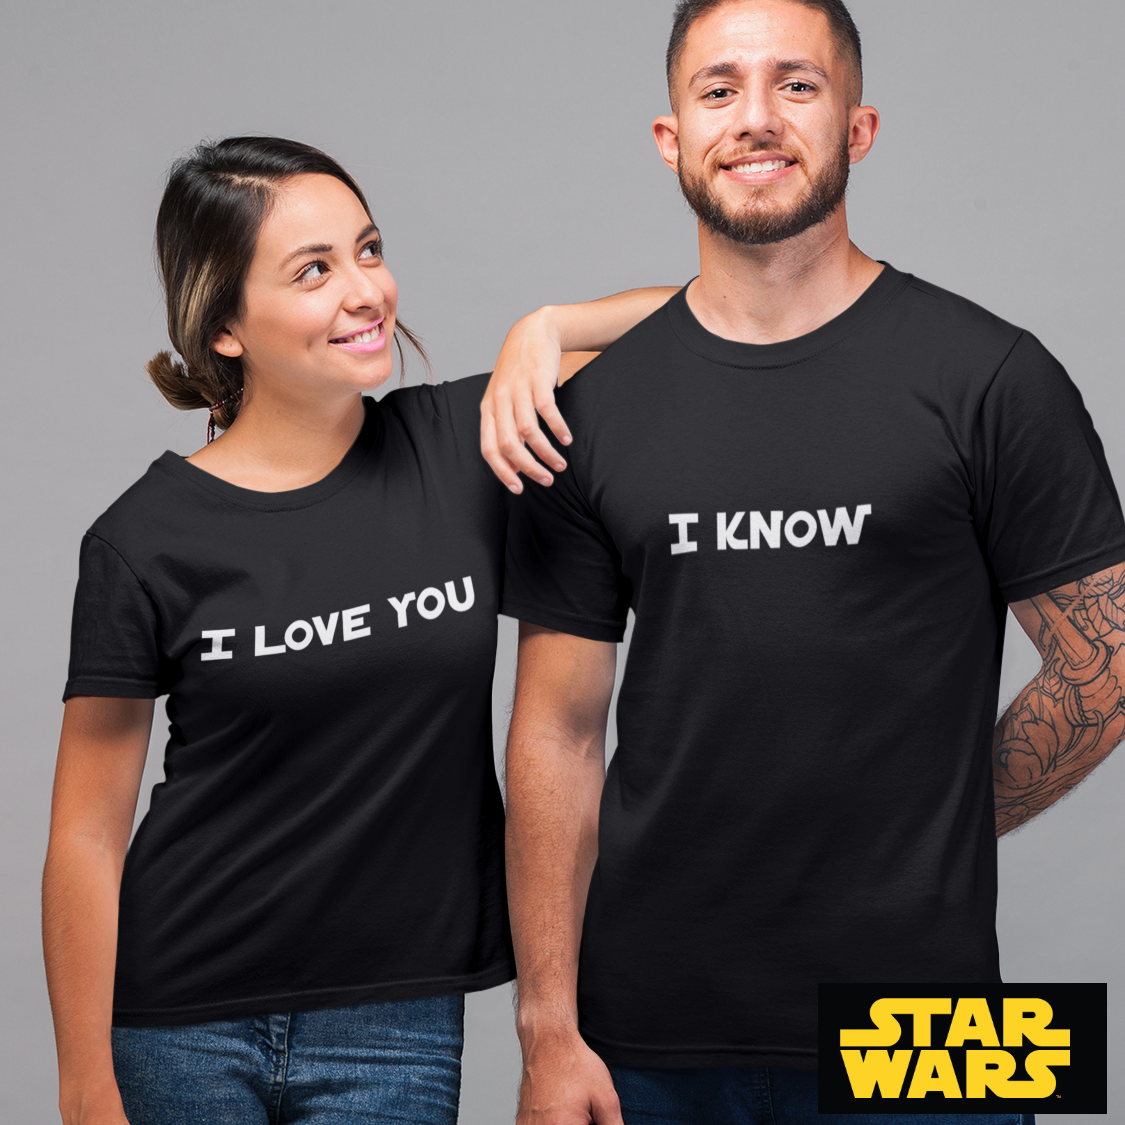 STAR WARS "I Love You / I Know" - Tshirt